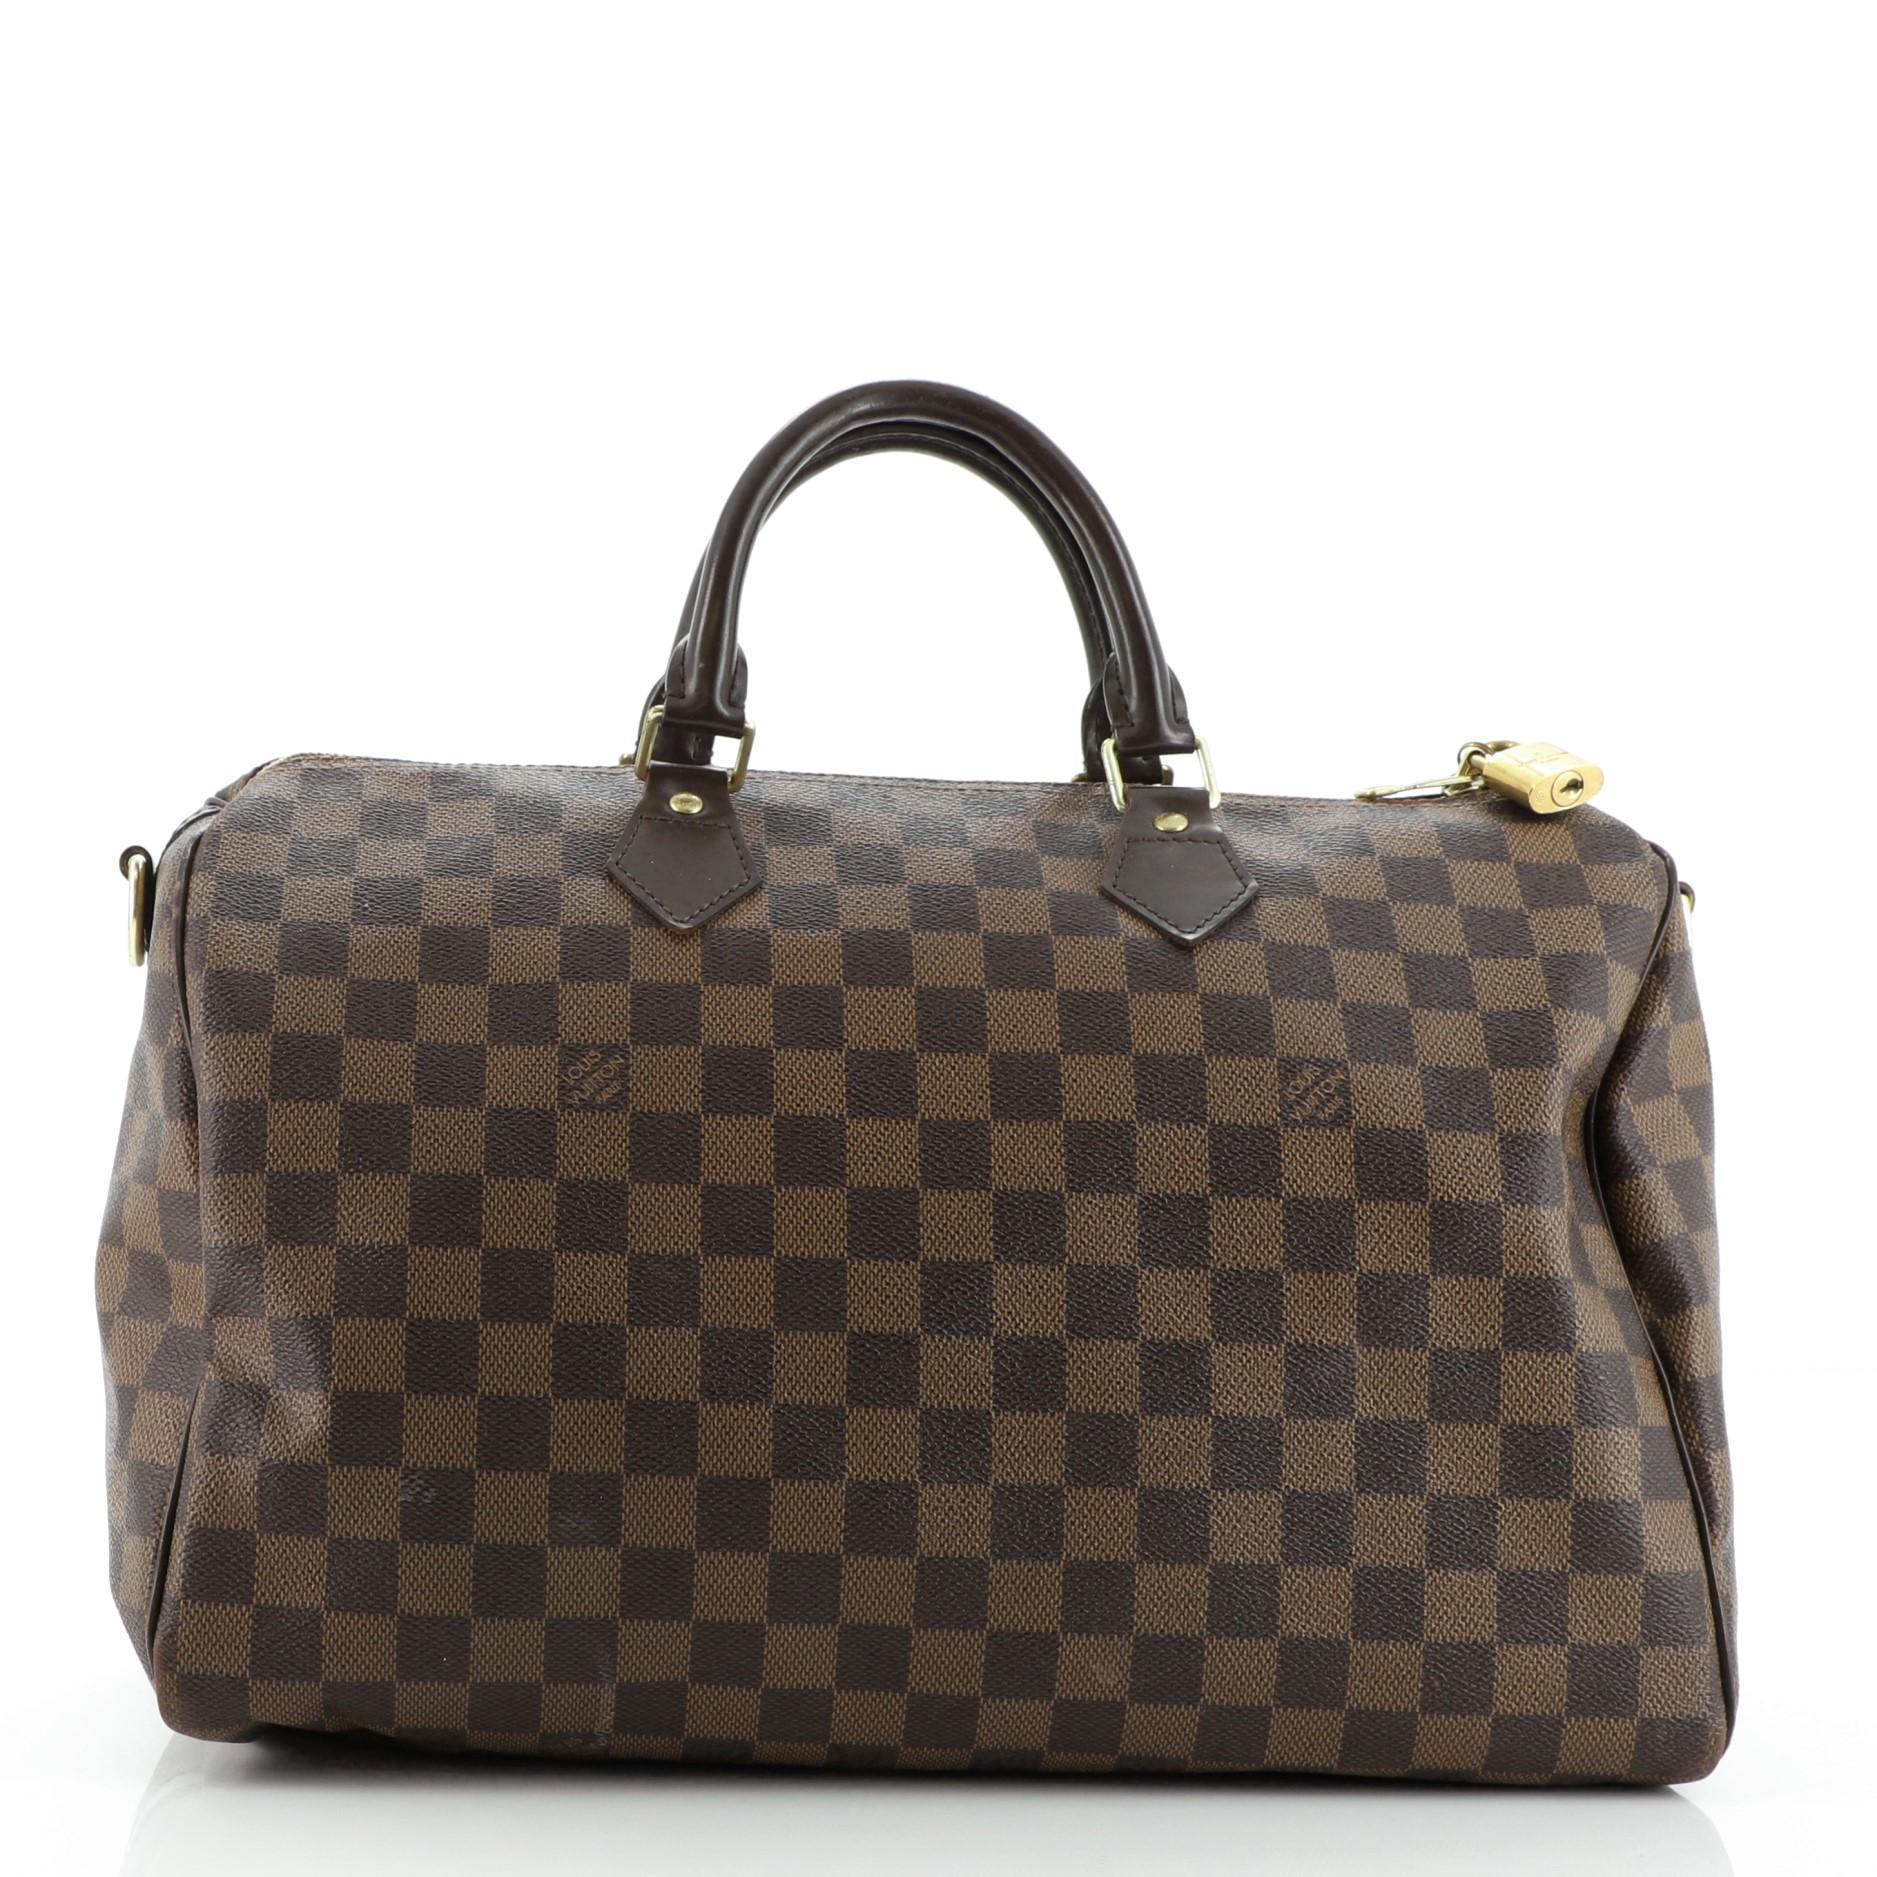 Black Louis Vuitton Speedy Bandouliere Bag Damier 35